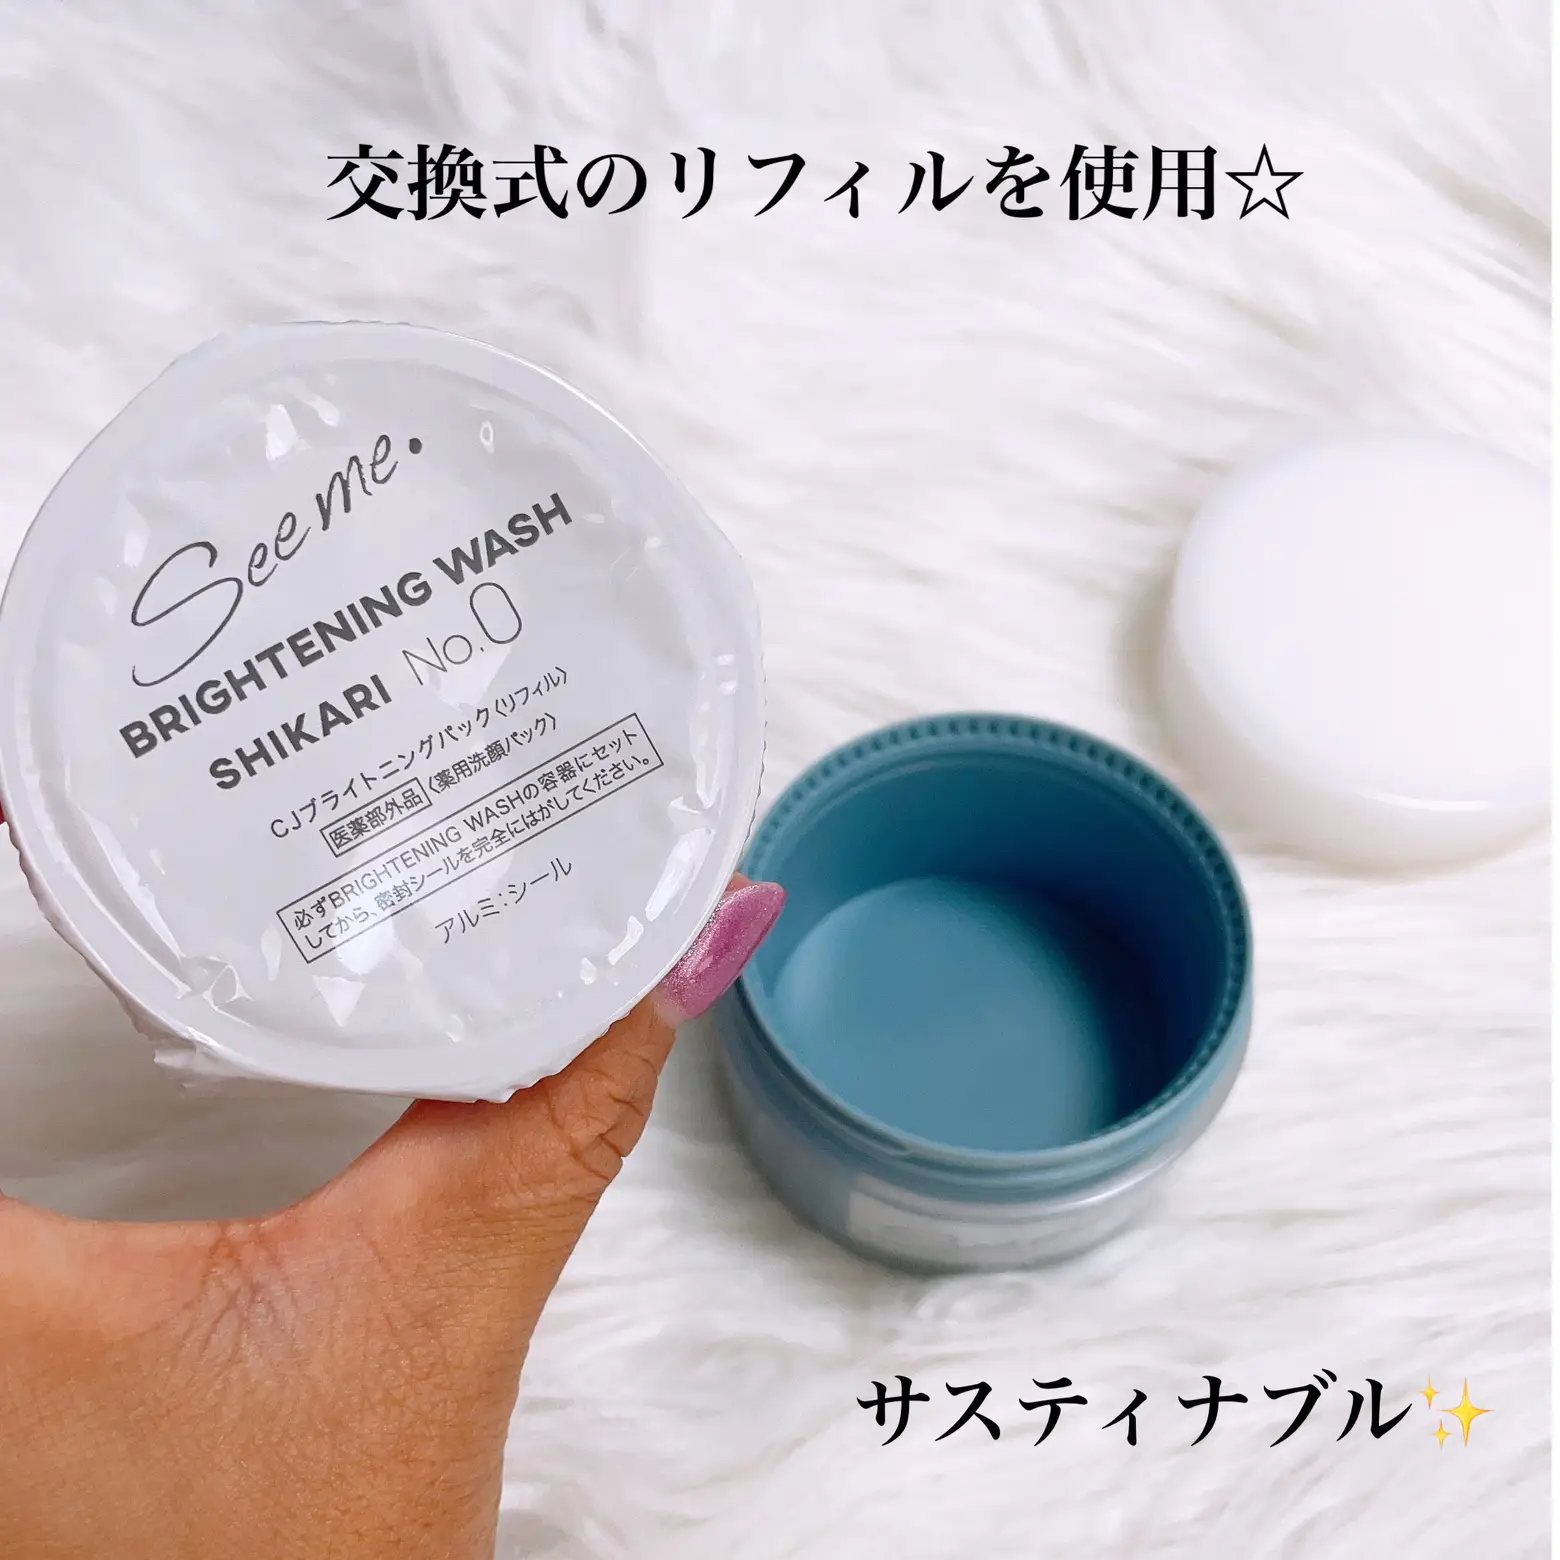 SHIKARI No.0 洗顔 リフィル - 洗顔グッズ